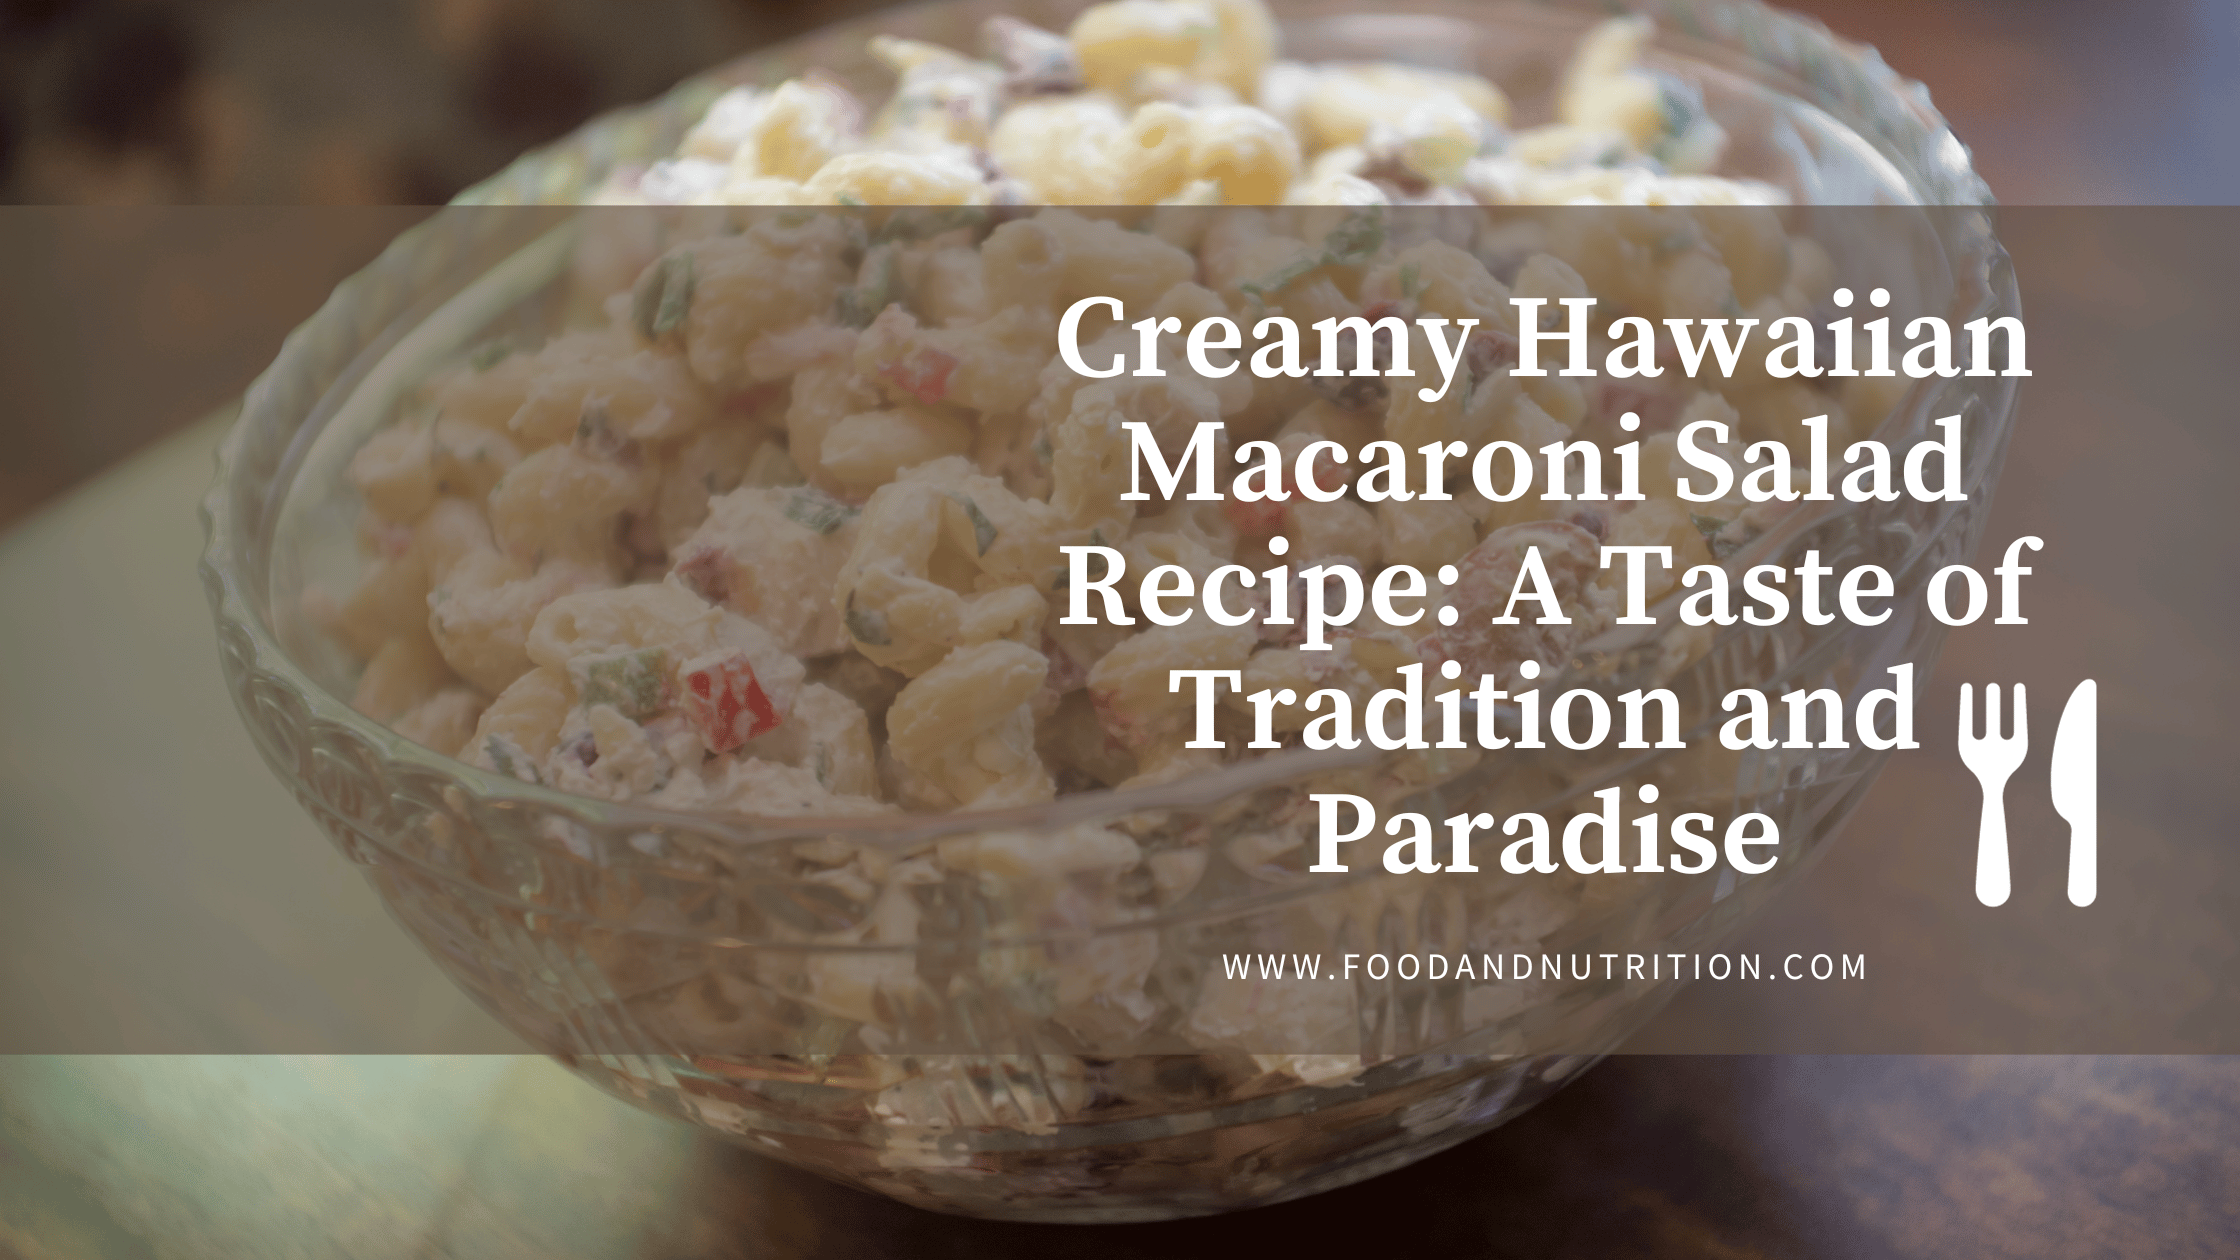 Creamy Hawaiian Macaroni Salad Recipe: A Taste of Tradition and Paradise